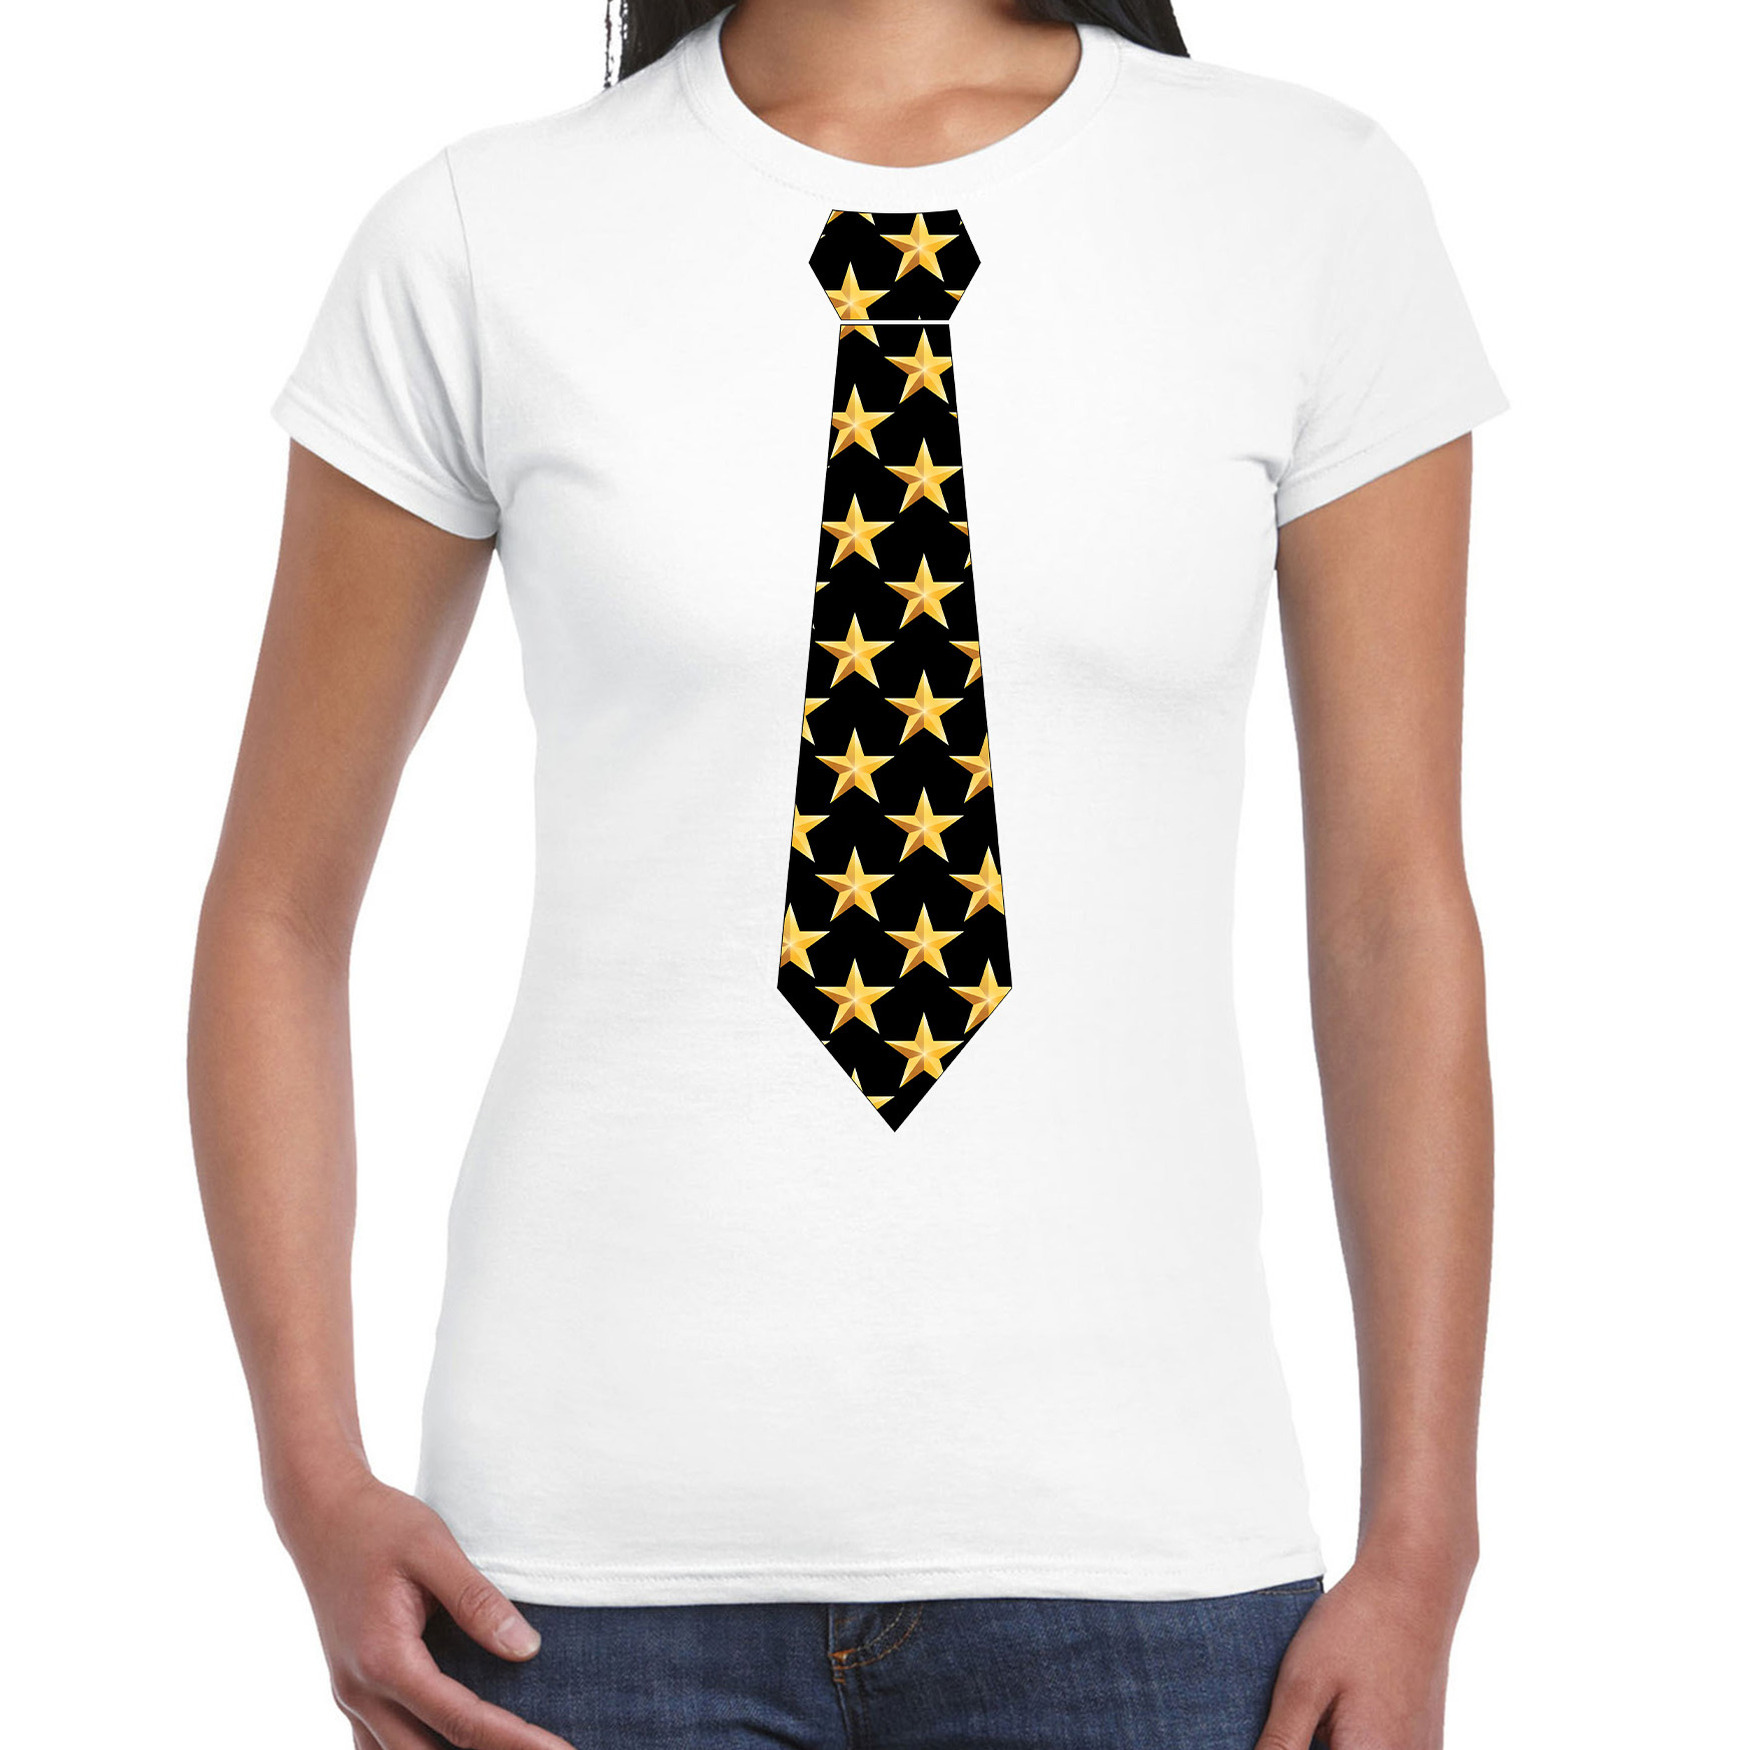 Thema-verkleed feest stropdas t-shirt sterretjes voor dames wit